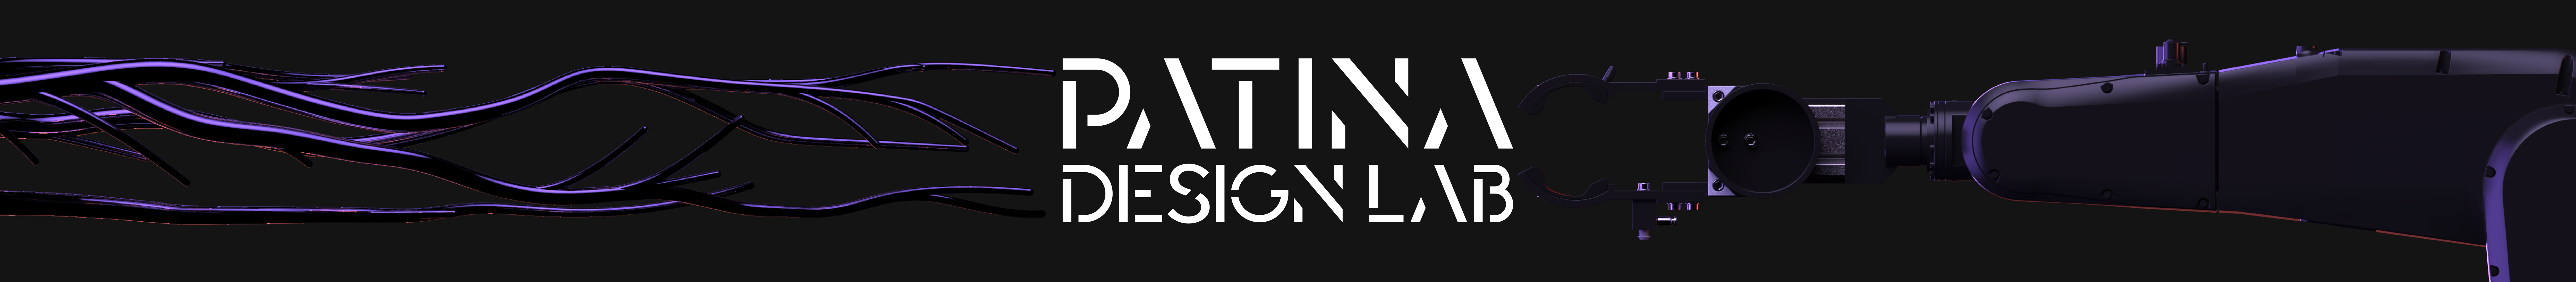 Patina Design Lab's profile banner